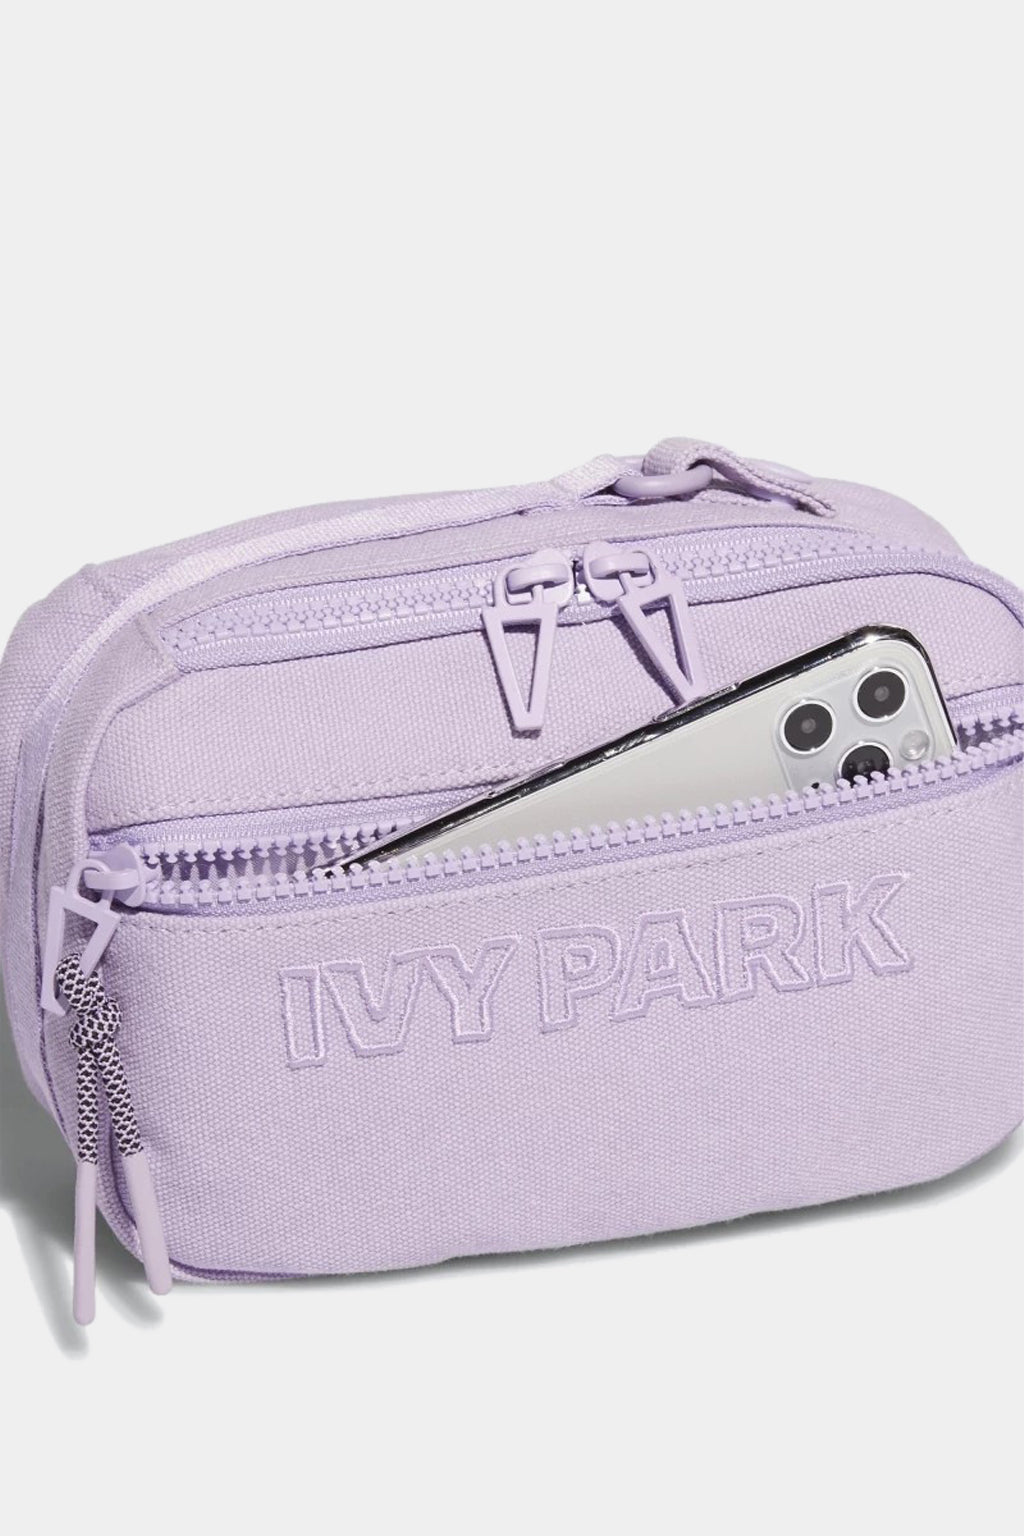 Adidas - Ivy Park Crossbody Bag